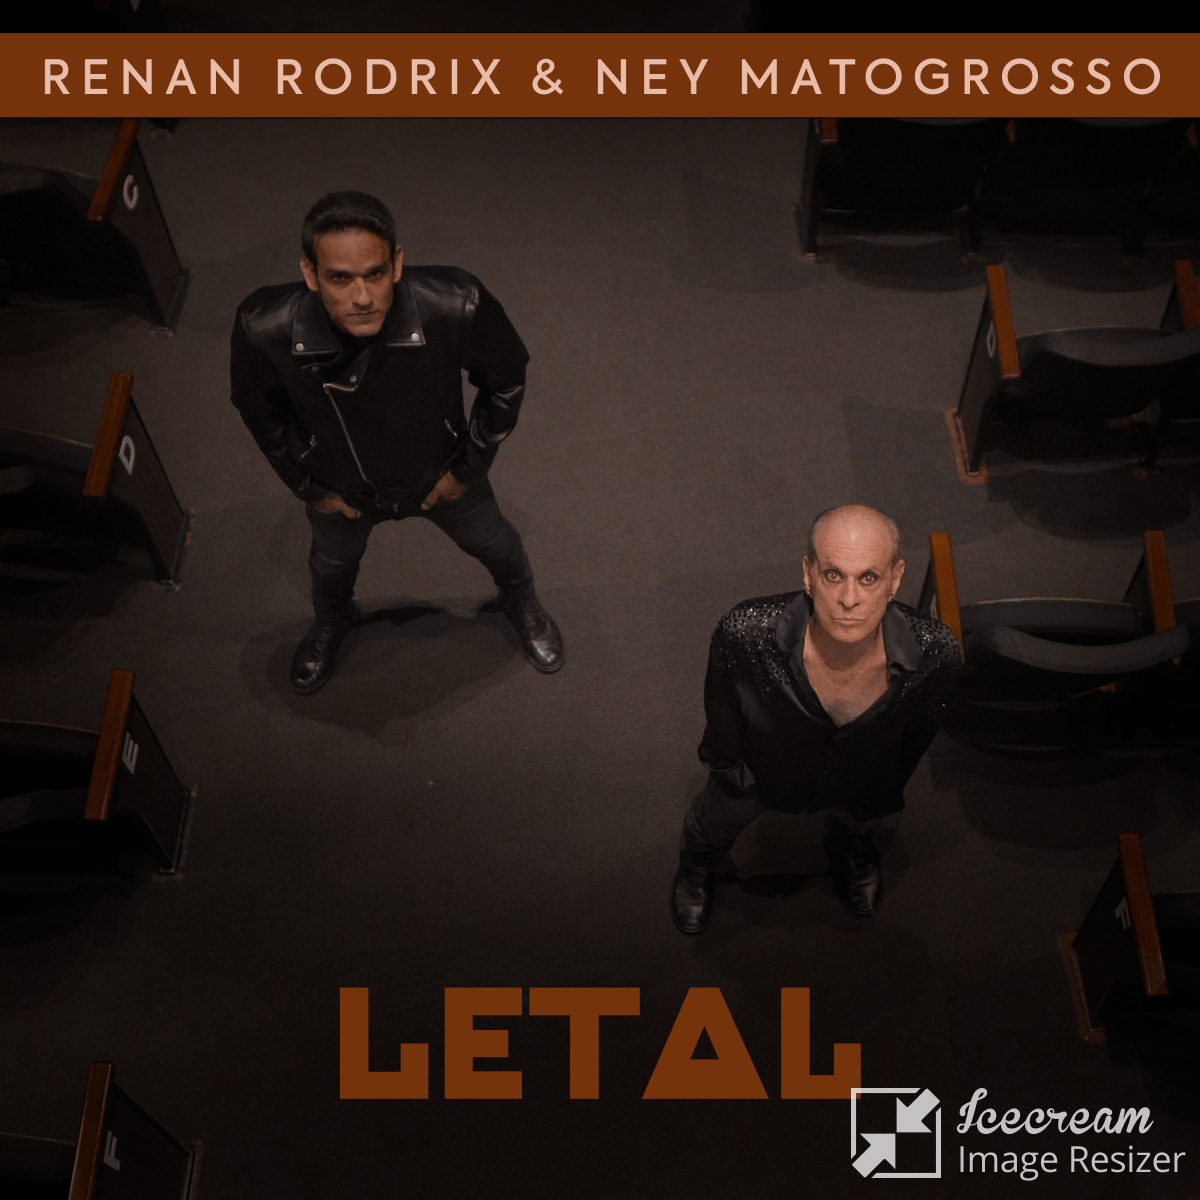 Ney Matogrosso e Renan Rodrix lançam álbum juntos